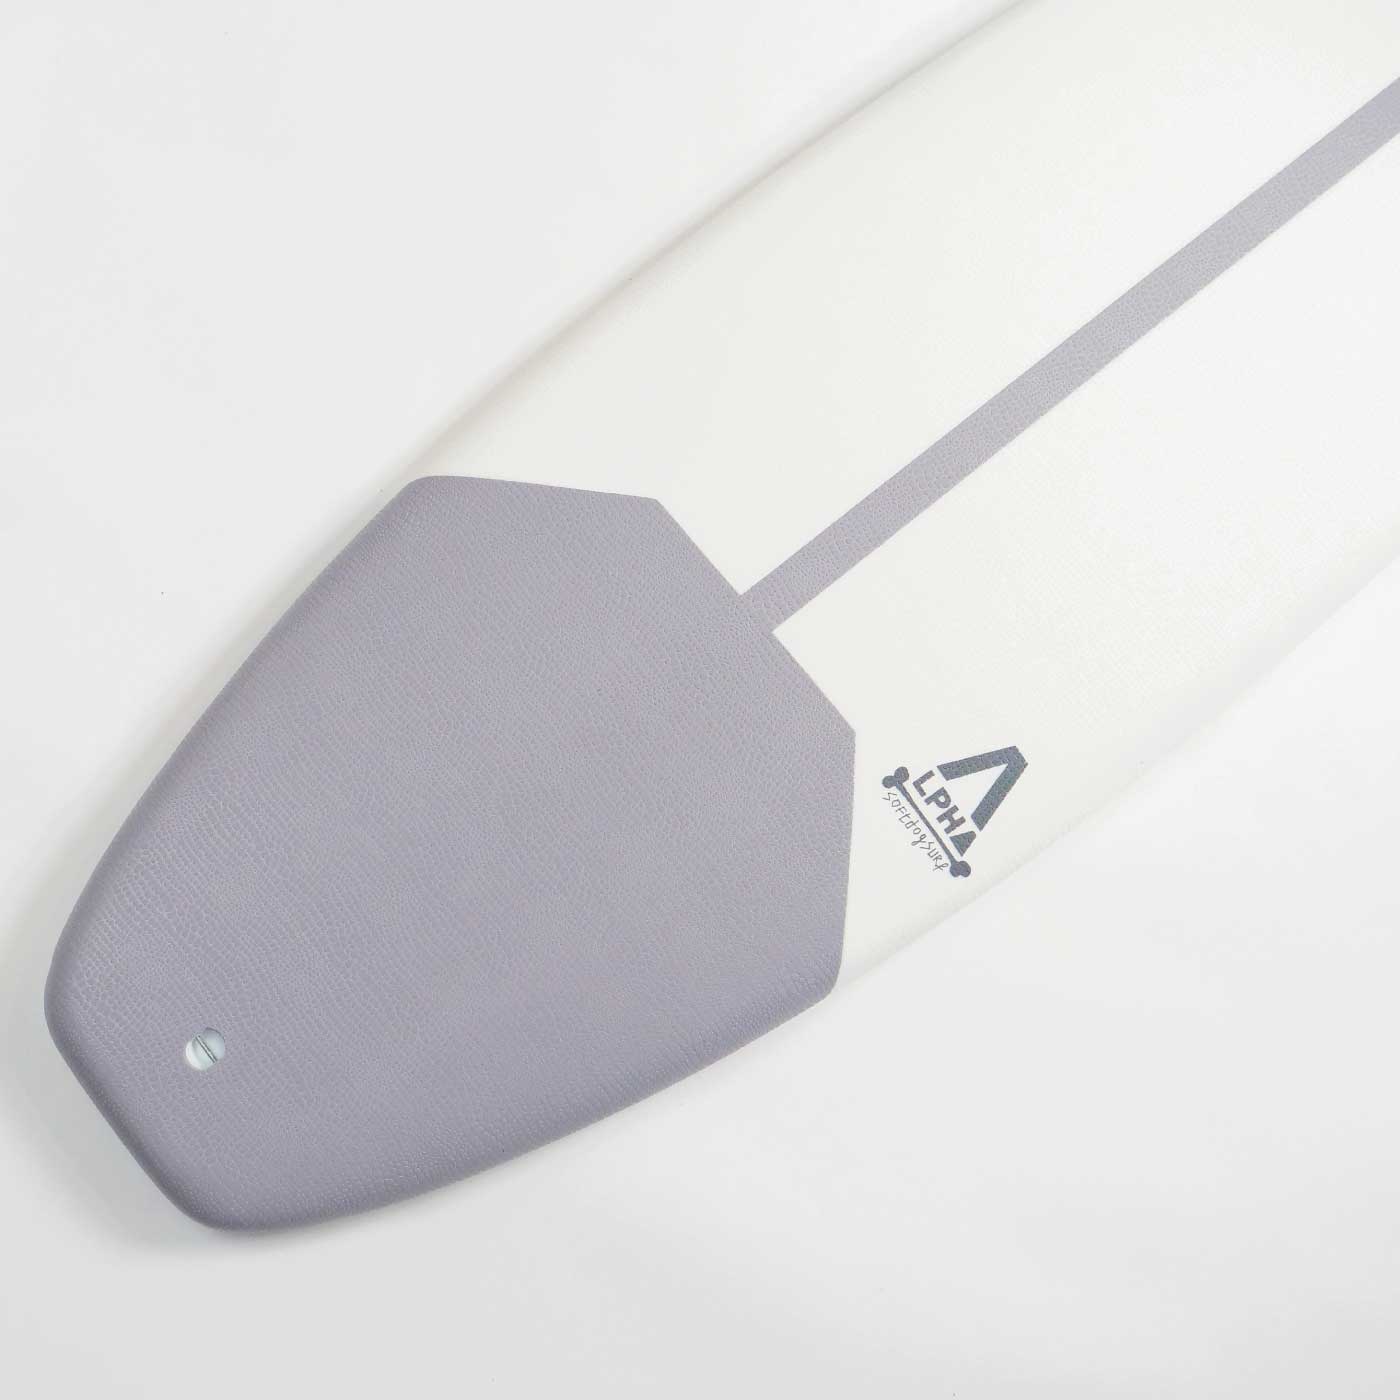 4'10 soft top high-performance surfboard kids tail grip